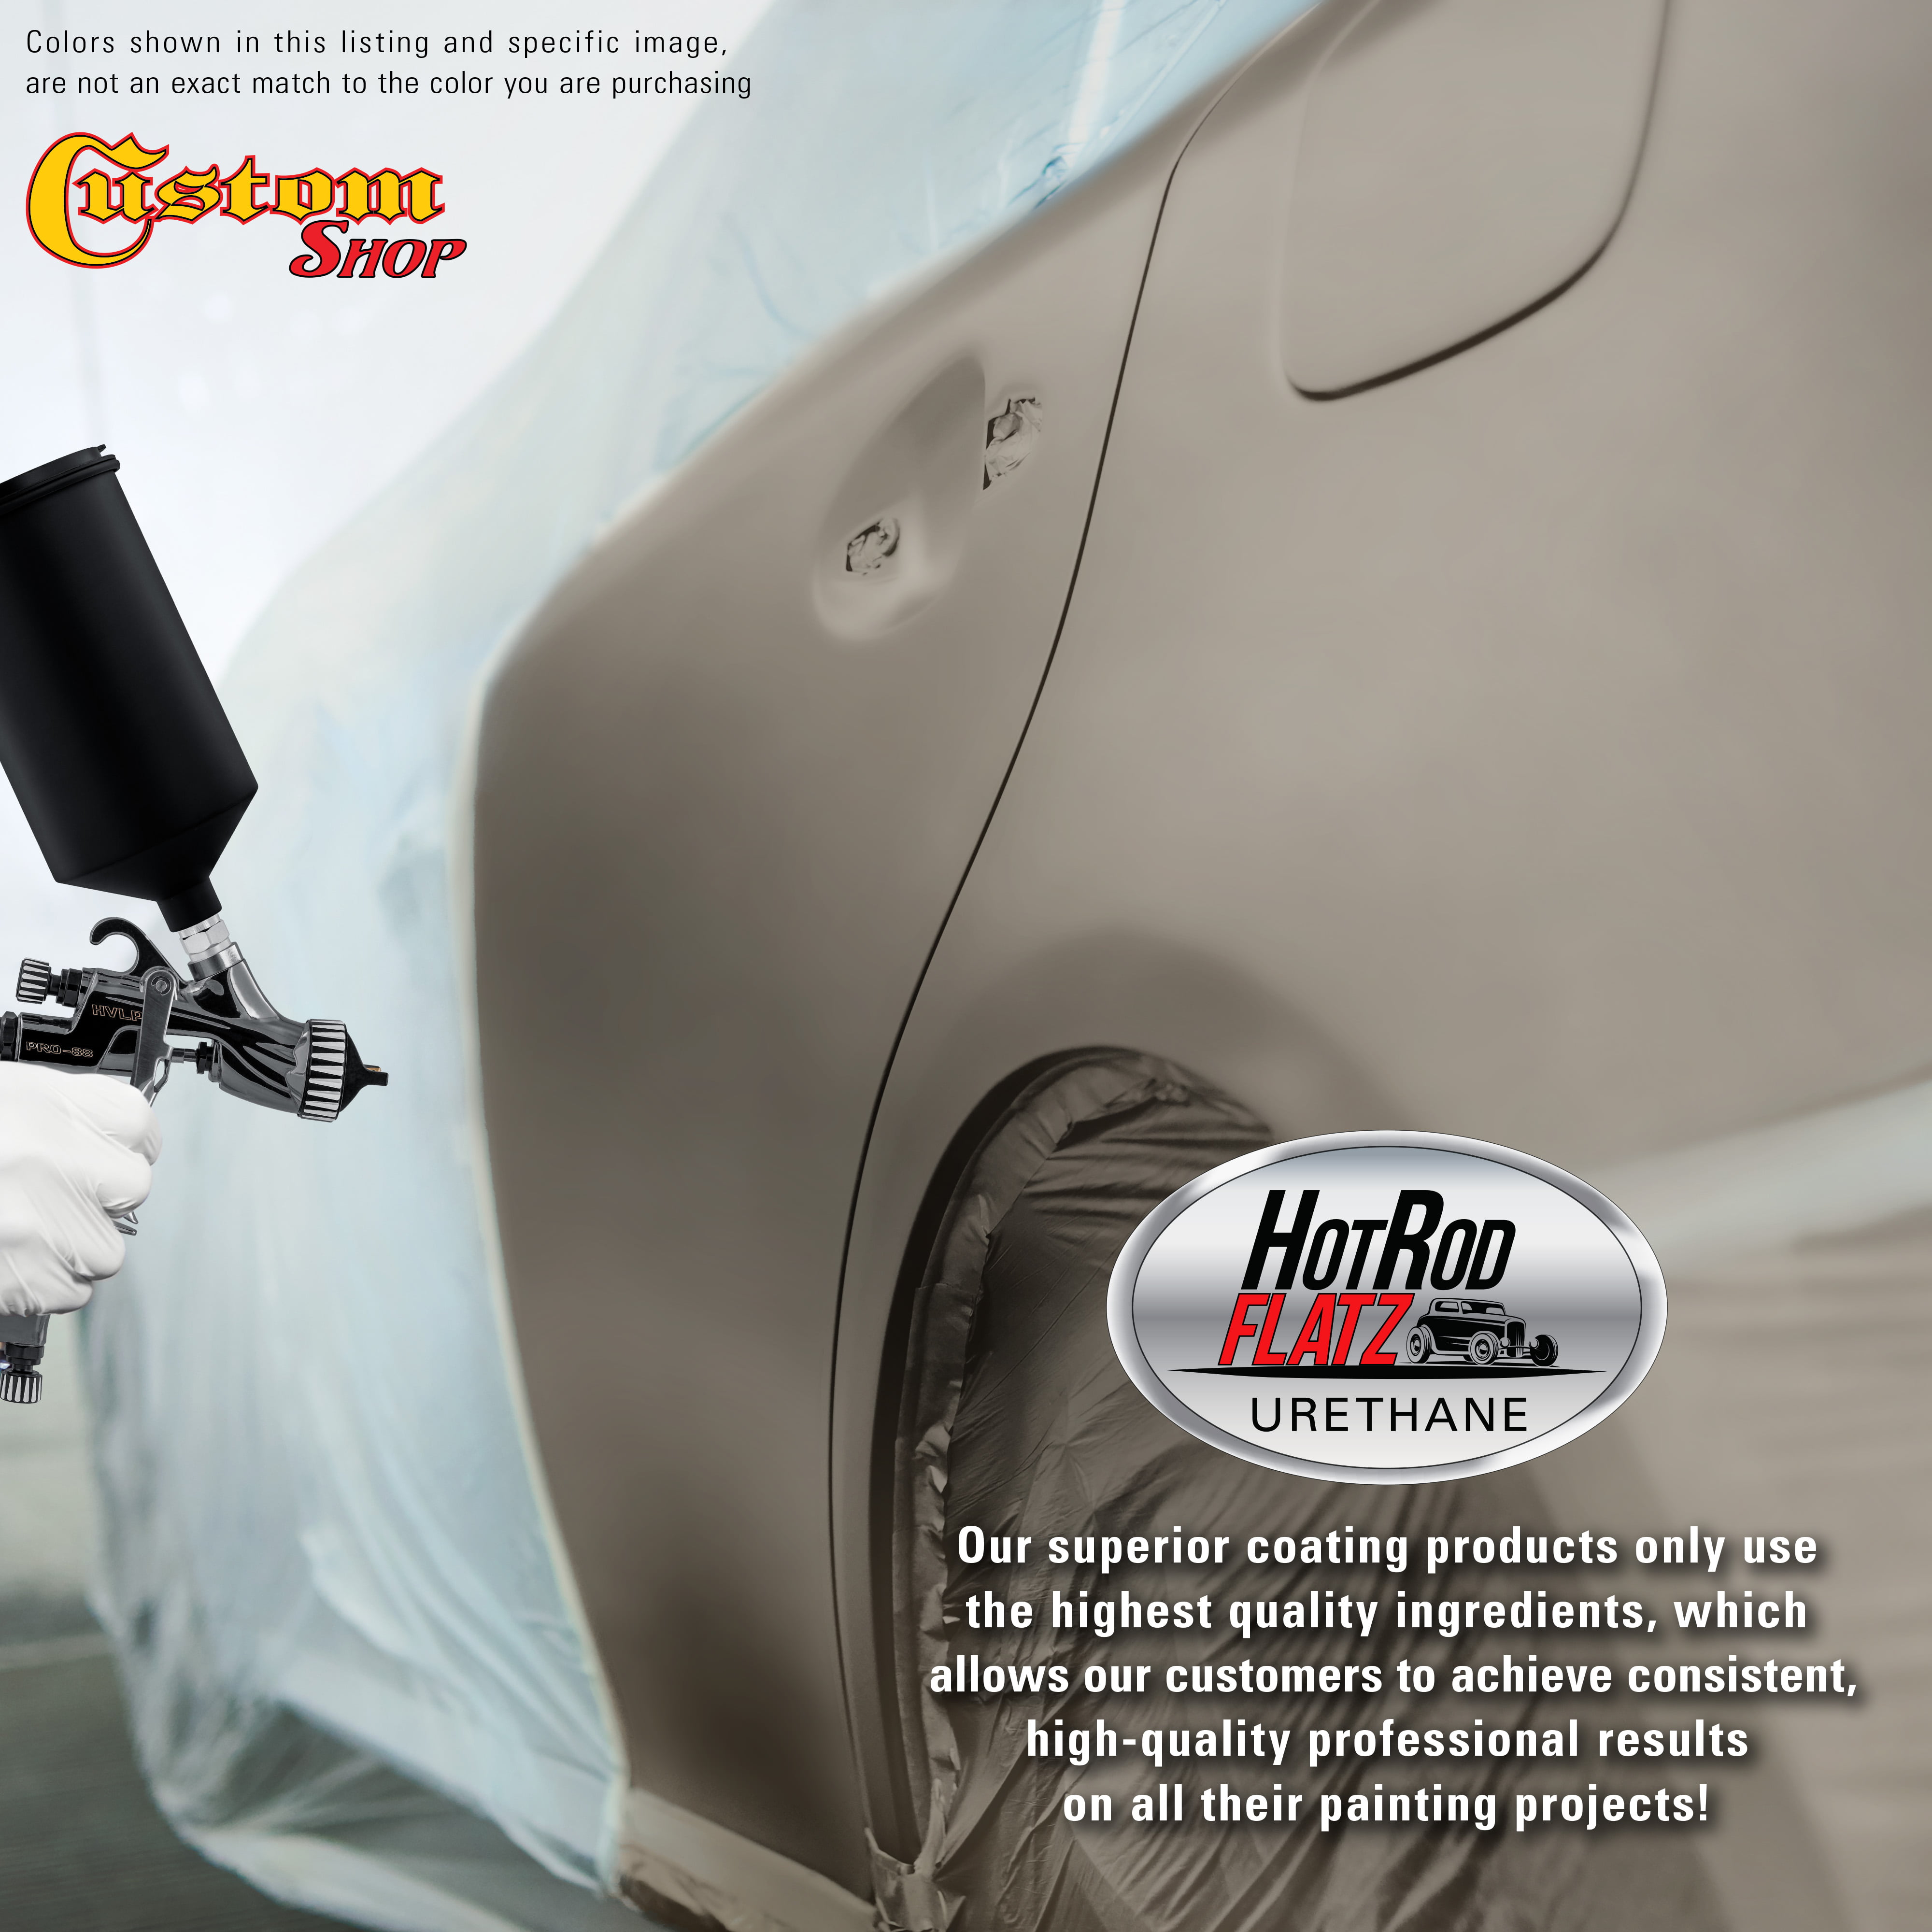 Custom Shop - Warm Gray Metallic - Hot Rod Flatz Flat Matte Satin Urethane  Auto Paint - Complete Gallon Paint Kit - Professional Low Sheen Automotive, Car  Truck Coating, 4:1 Mix Ratio 